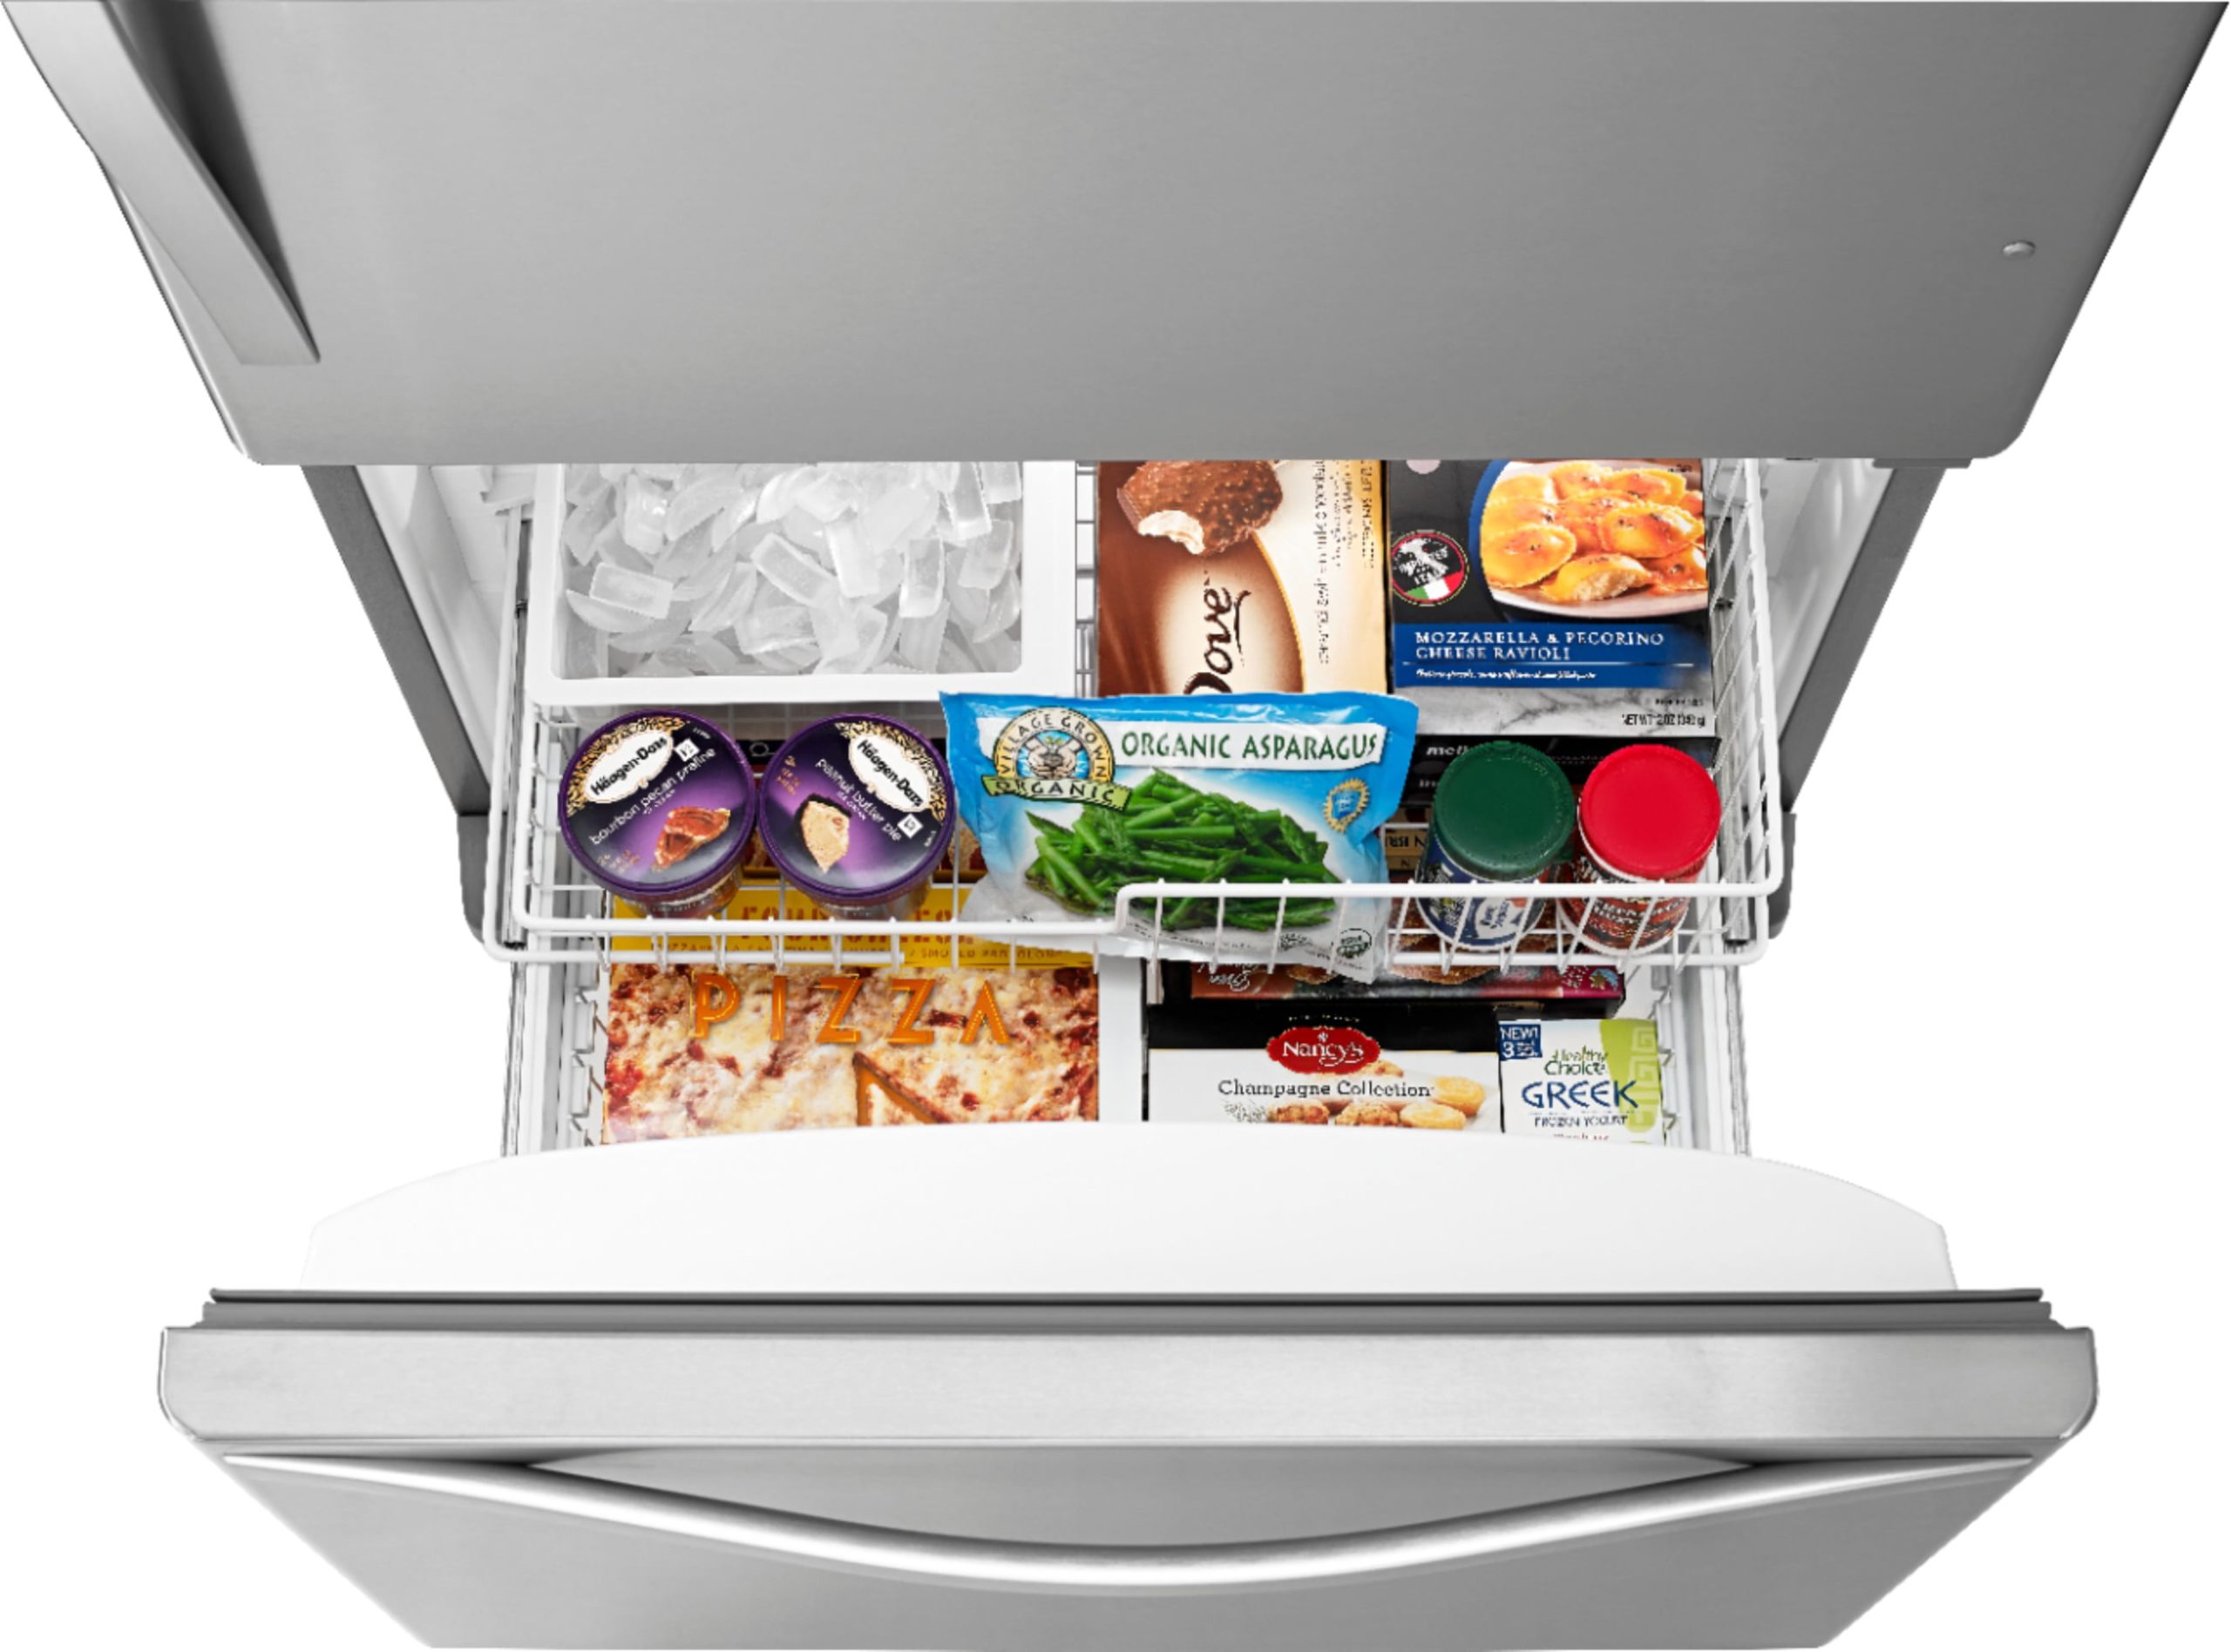 Best Bottom-Freezer Refrigerators